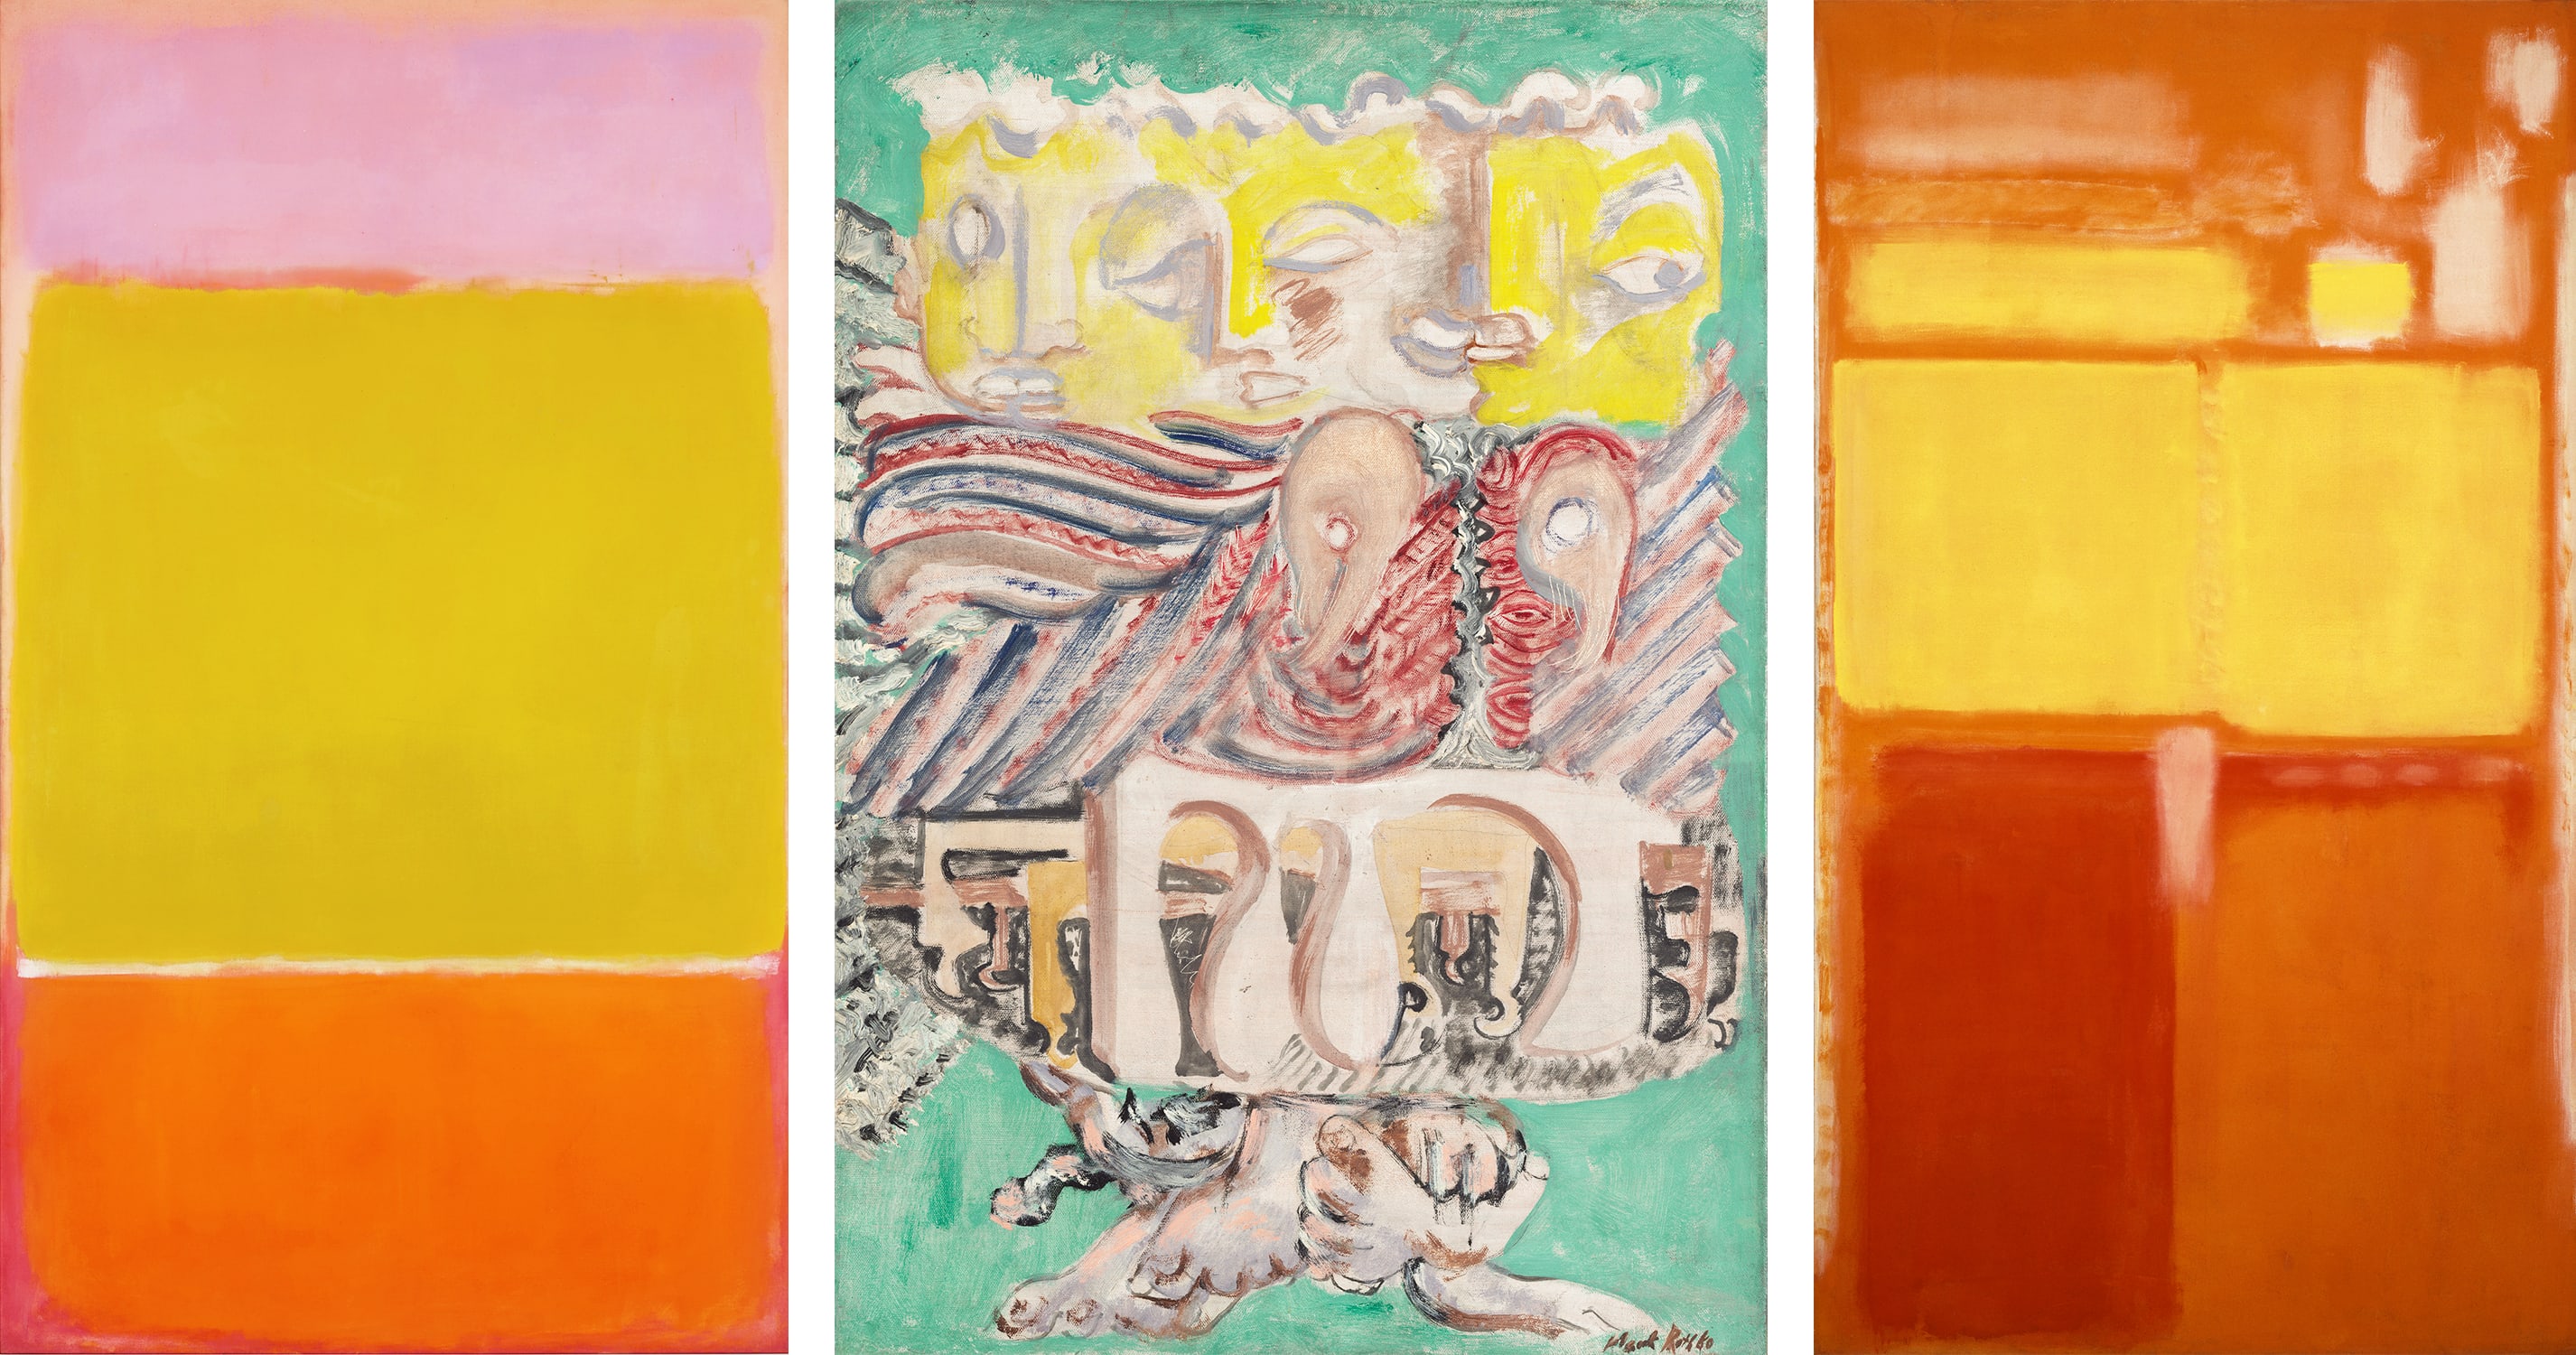 Left: Mark Rothko, No. 7, 1951. © 1998 Kate Rothko Prizel & Christopher Rothko - Adagp, Paris, 2023. Middle: Mark Rothko, The Omen of the Eagle, 1942. © 1998 Kate Rothko Prizel & Christopher Rothko - Adagp, Paris, 2023. Right: Mark Rothko, No. 21, 1949. © 1998 Kate Rothko Prizel & Christopher Rothko - Adagp, Paris, 2023. 